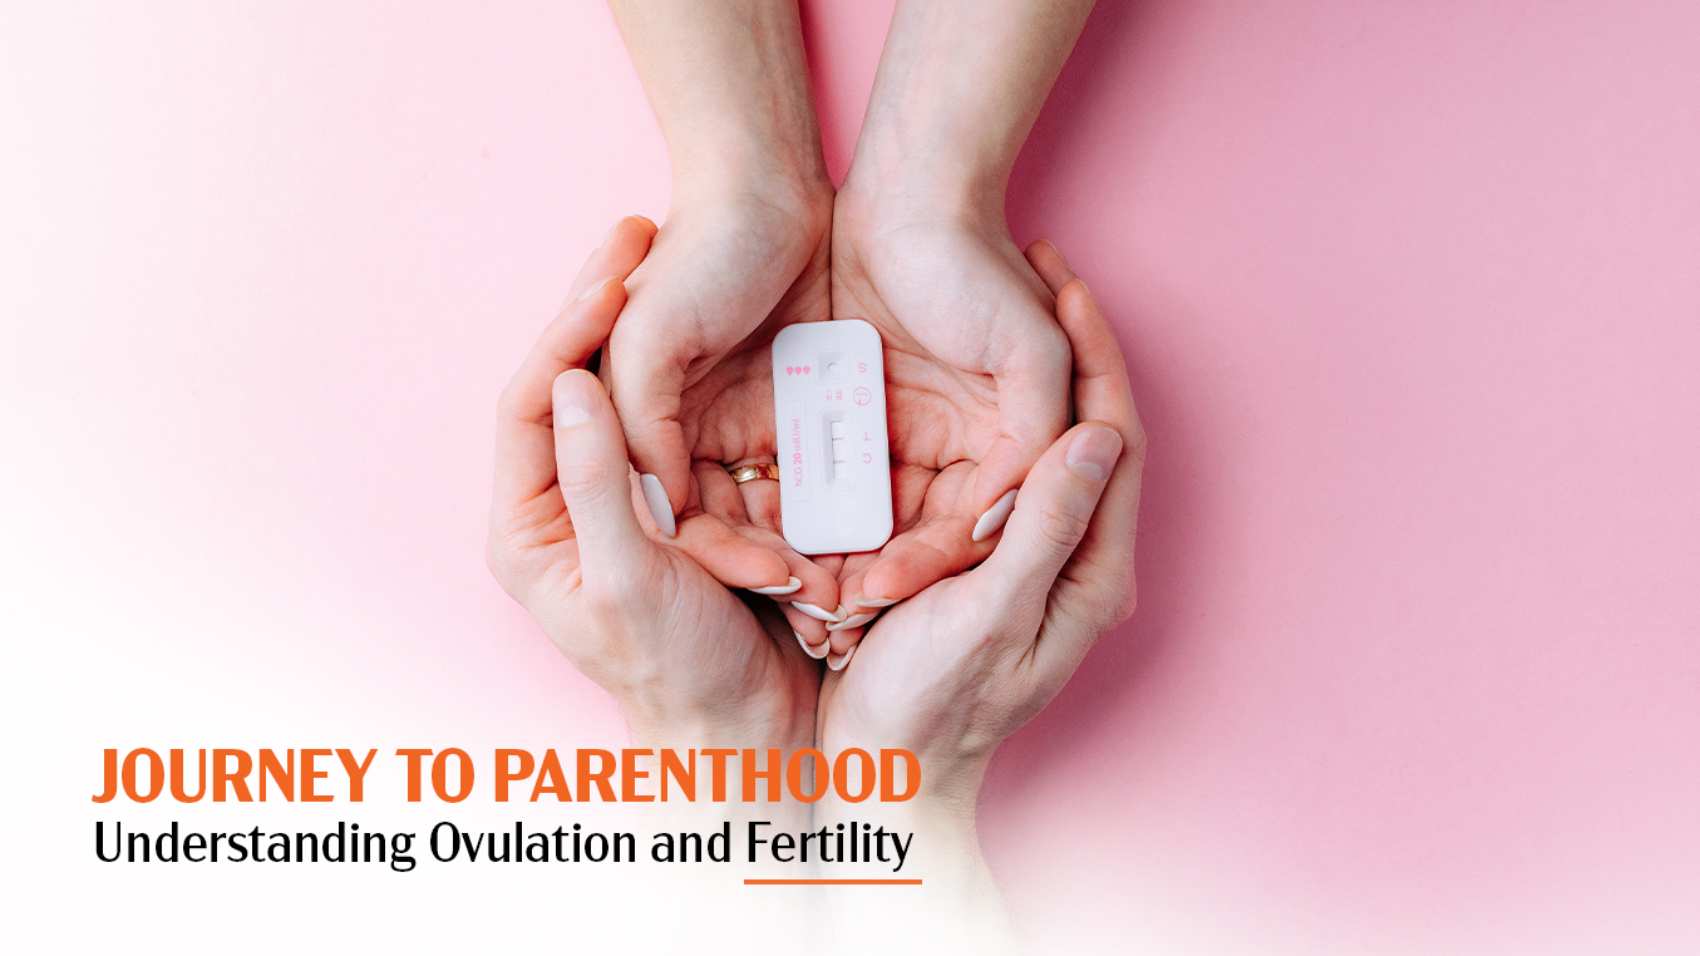 Understanding ovulation